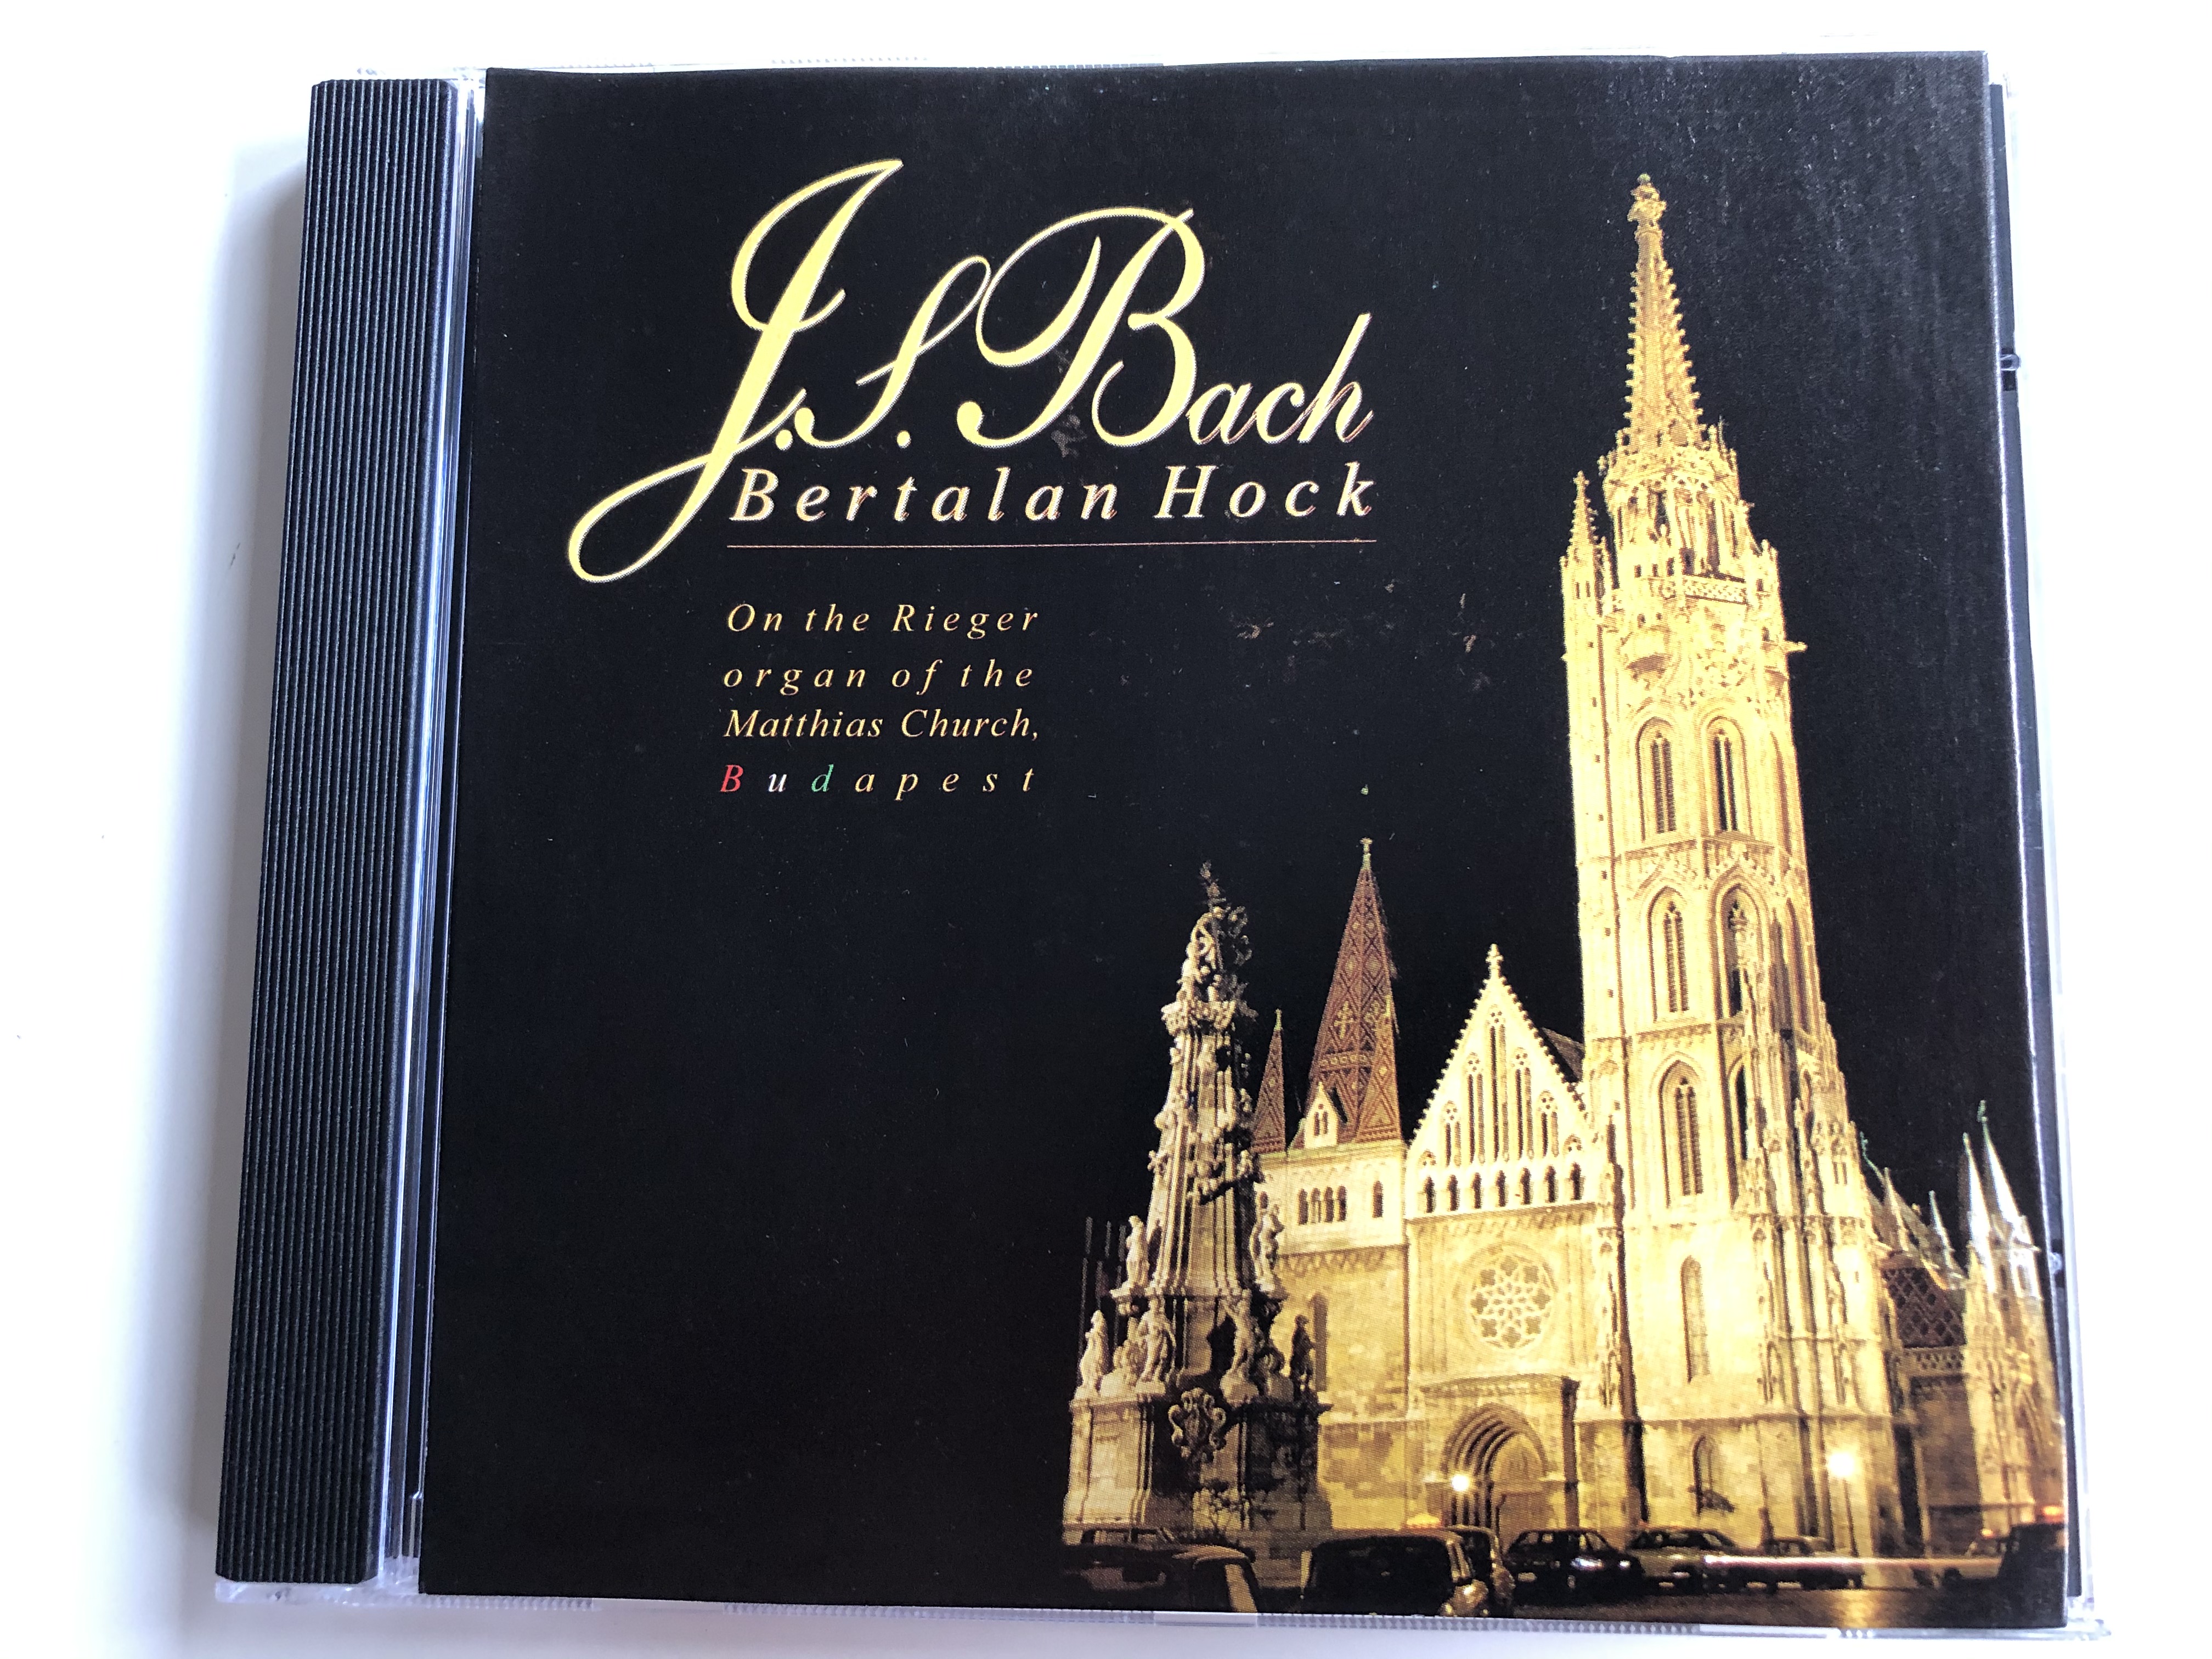 j.-s.-bach-bertalan-hock-on-the-rieger-organ-of-the-mathias-church-budapest-smon-kun-audio-cd-1994-stereo-skcd-001-1-.jpg